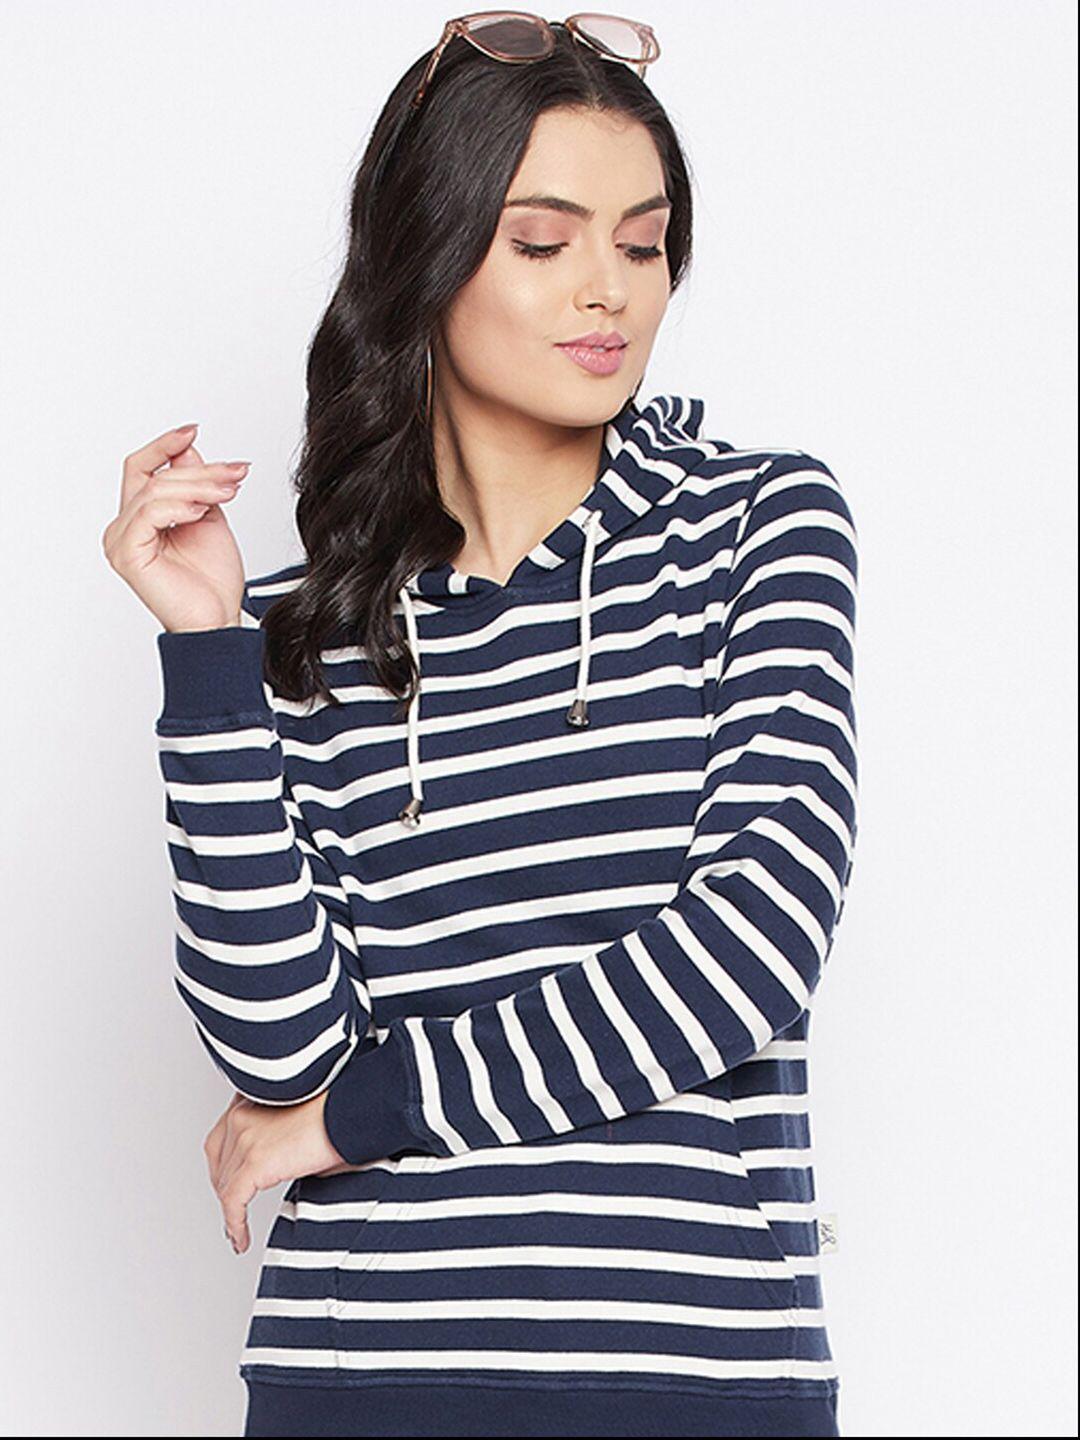 harbor n bay striped hooded fleece sweatshirt